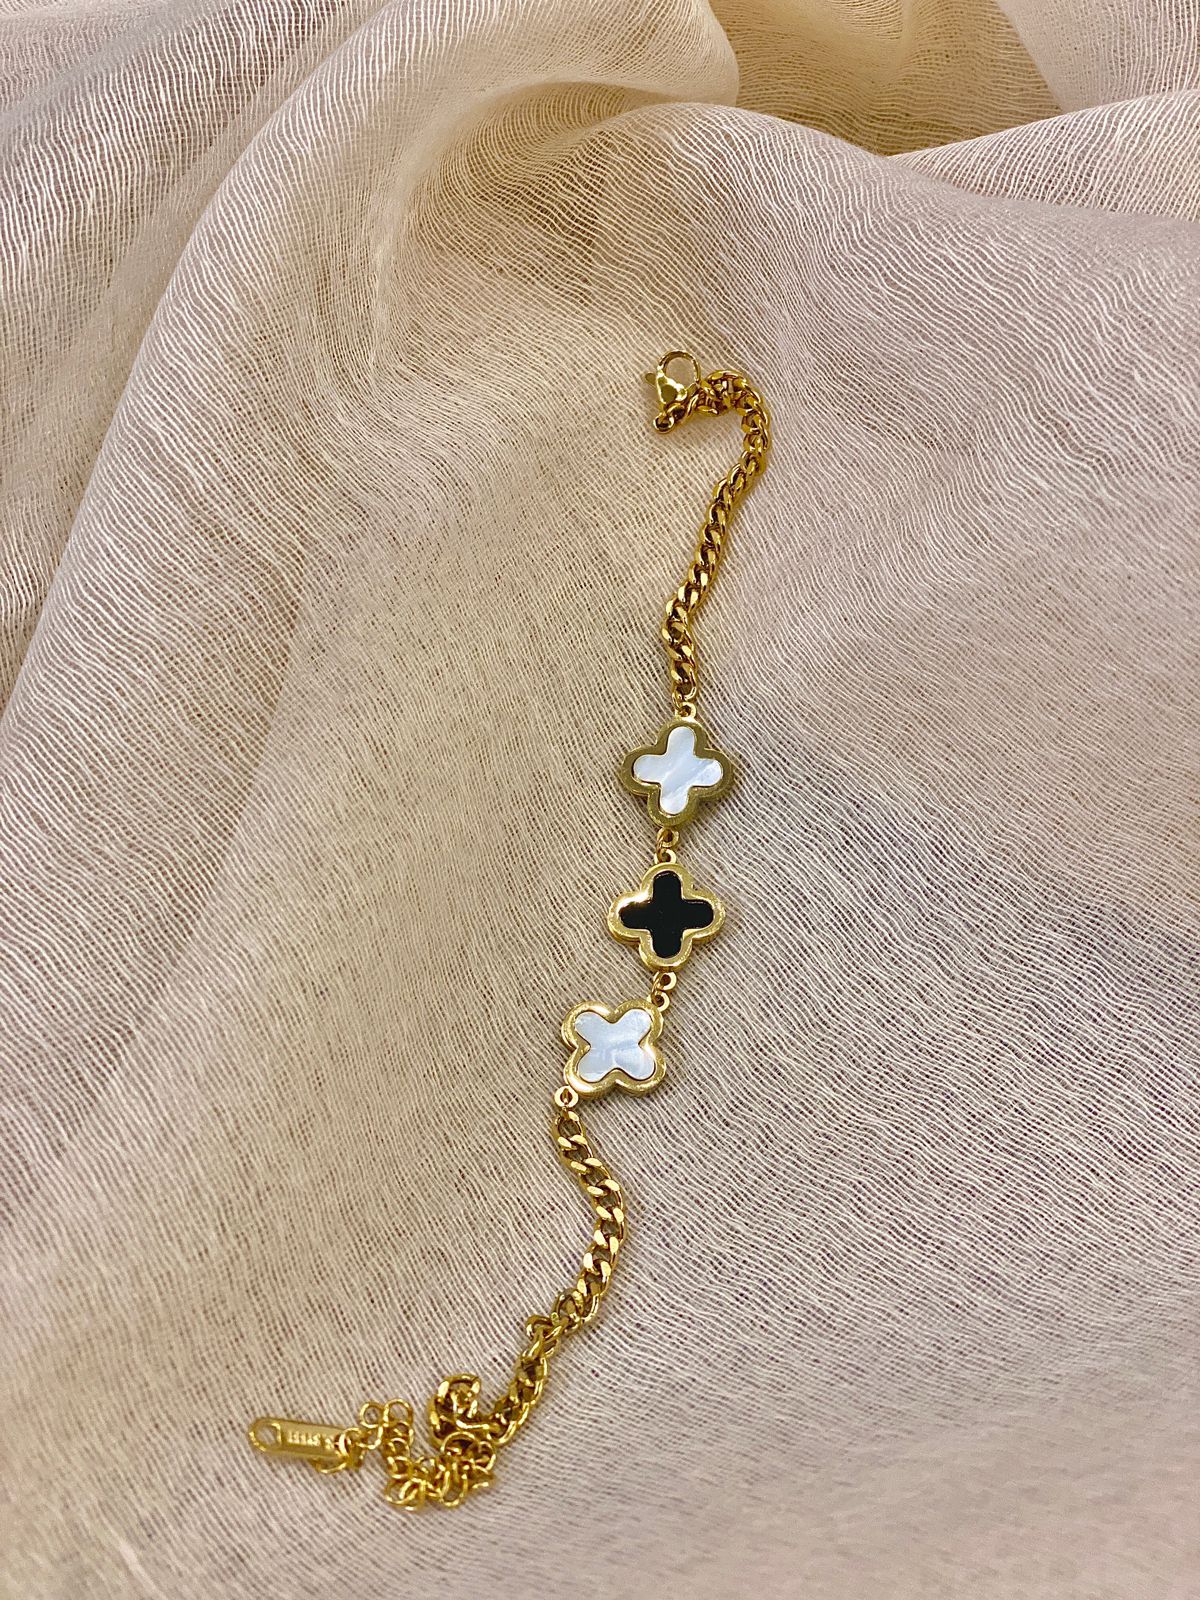 Gold Chain Bracelet With Black&White Clover